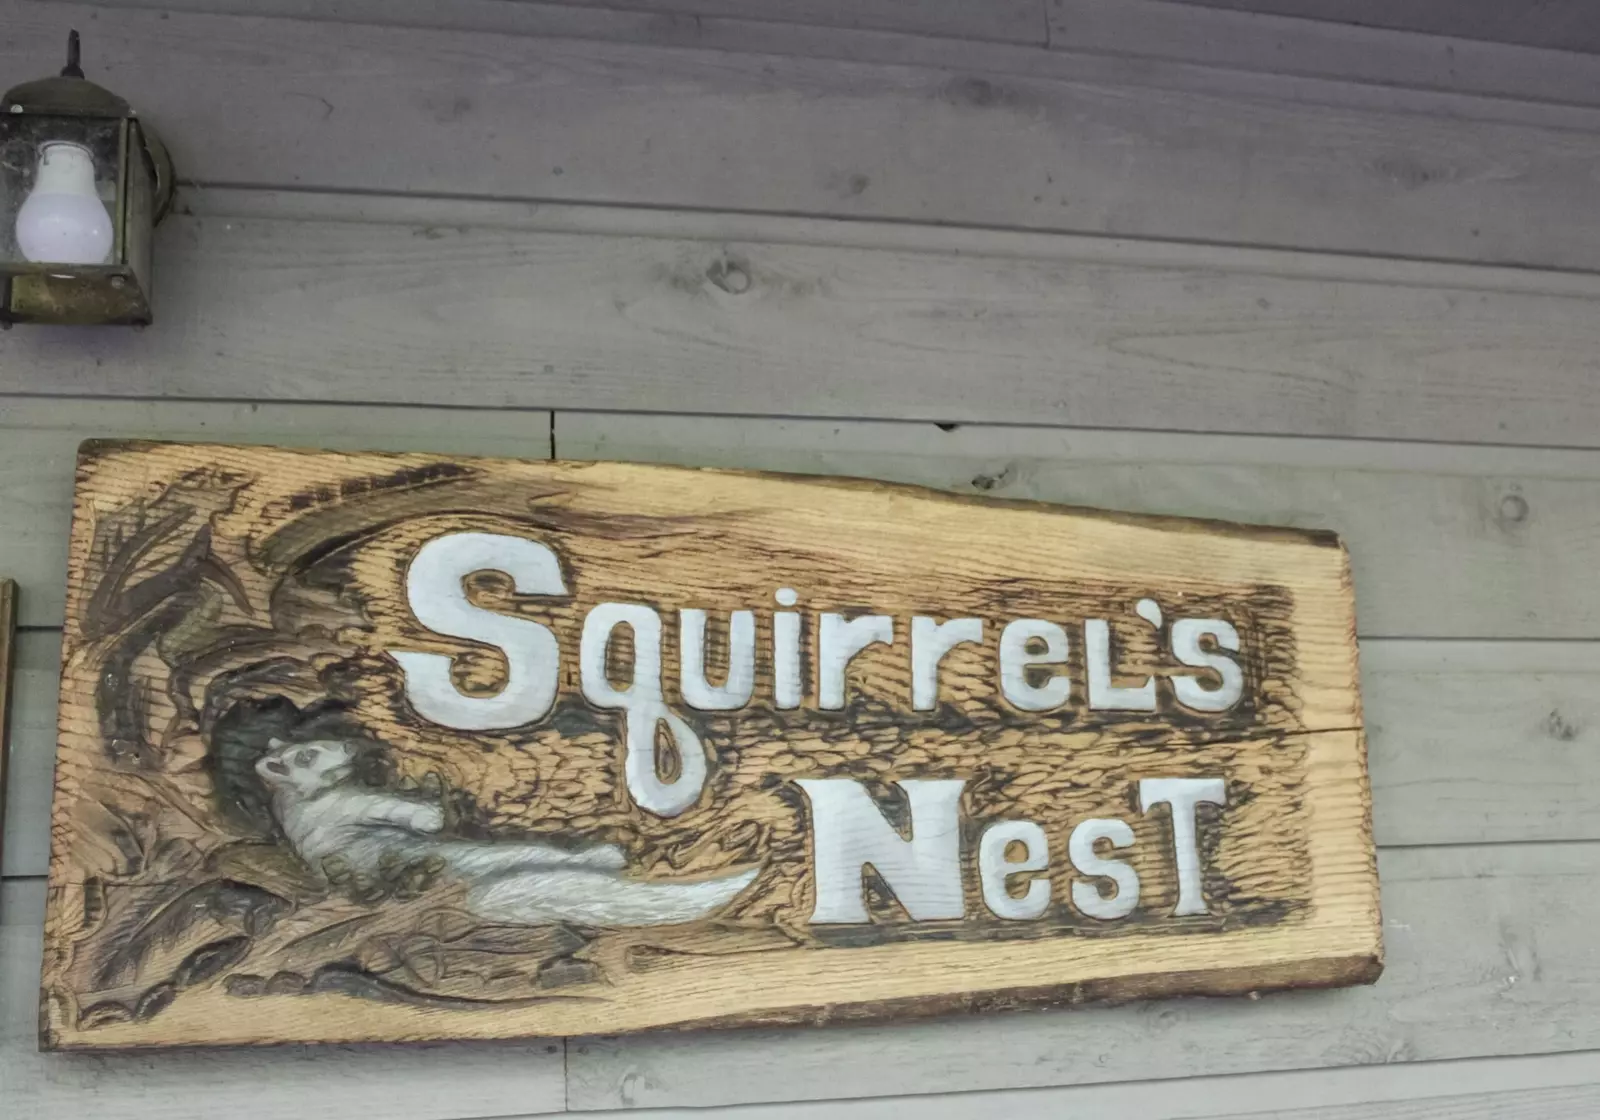 Squirrel's Nest